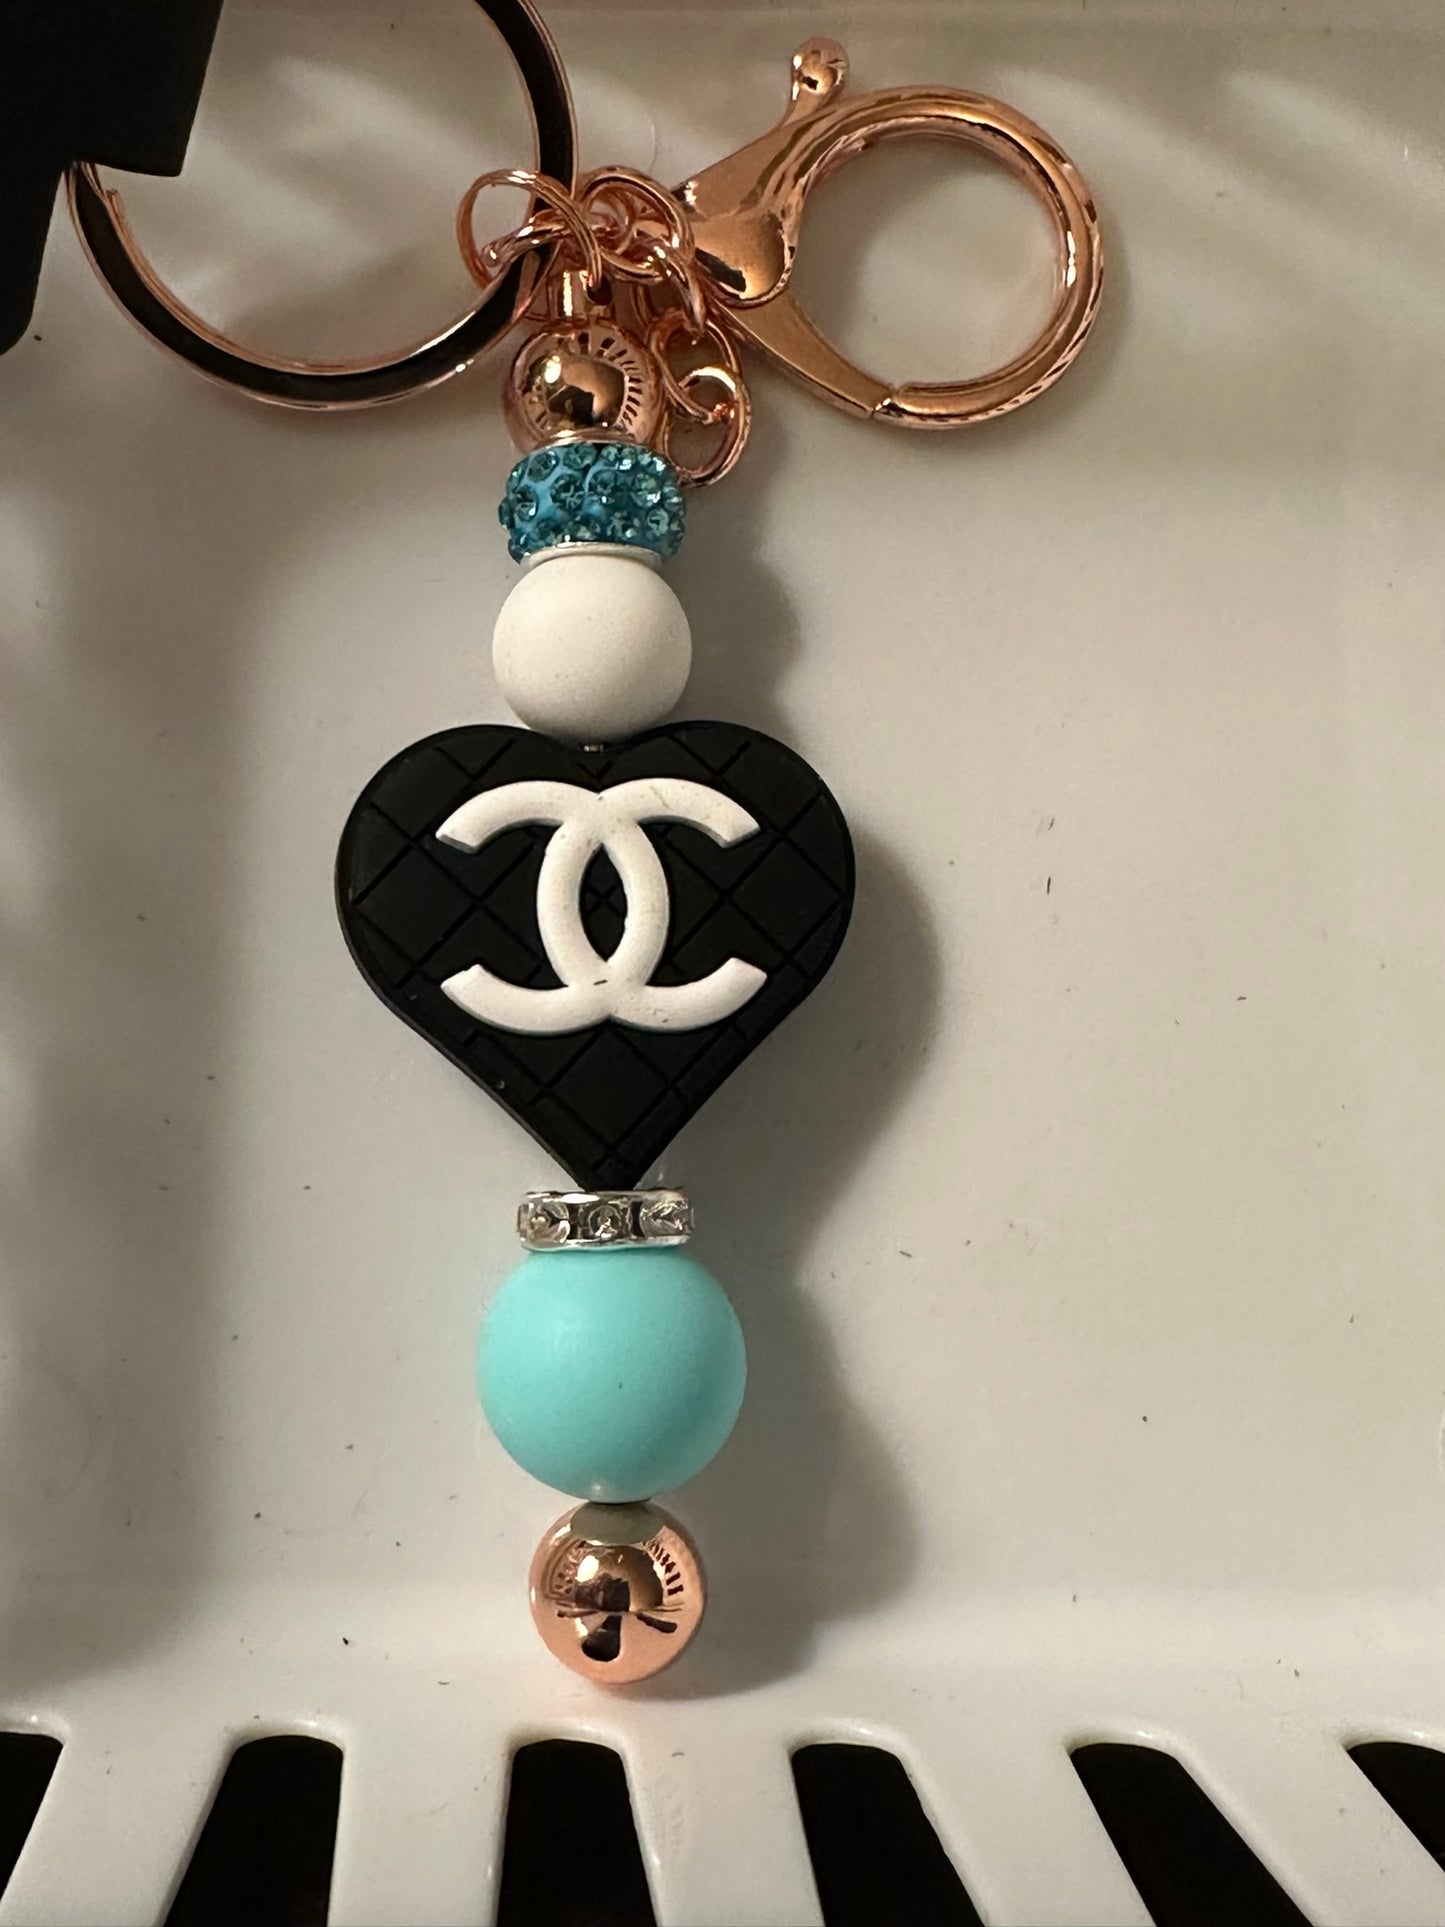 Chanel inspired bling key chain